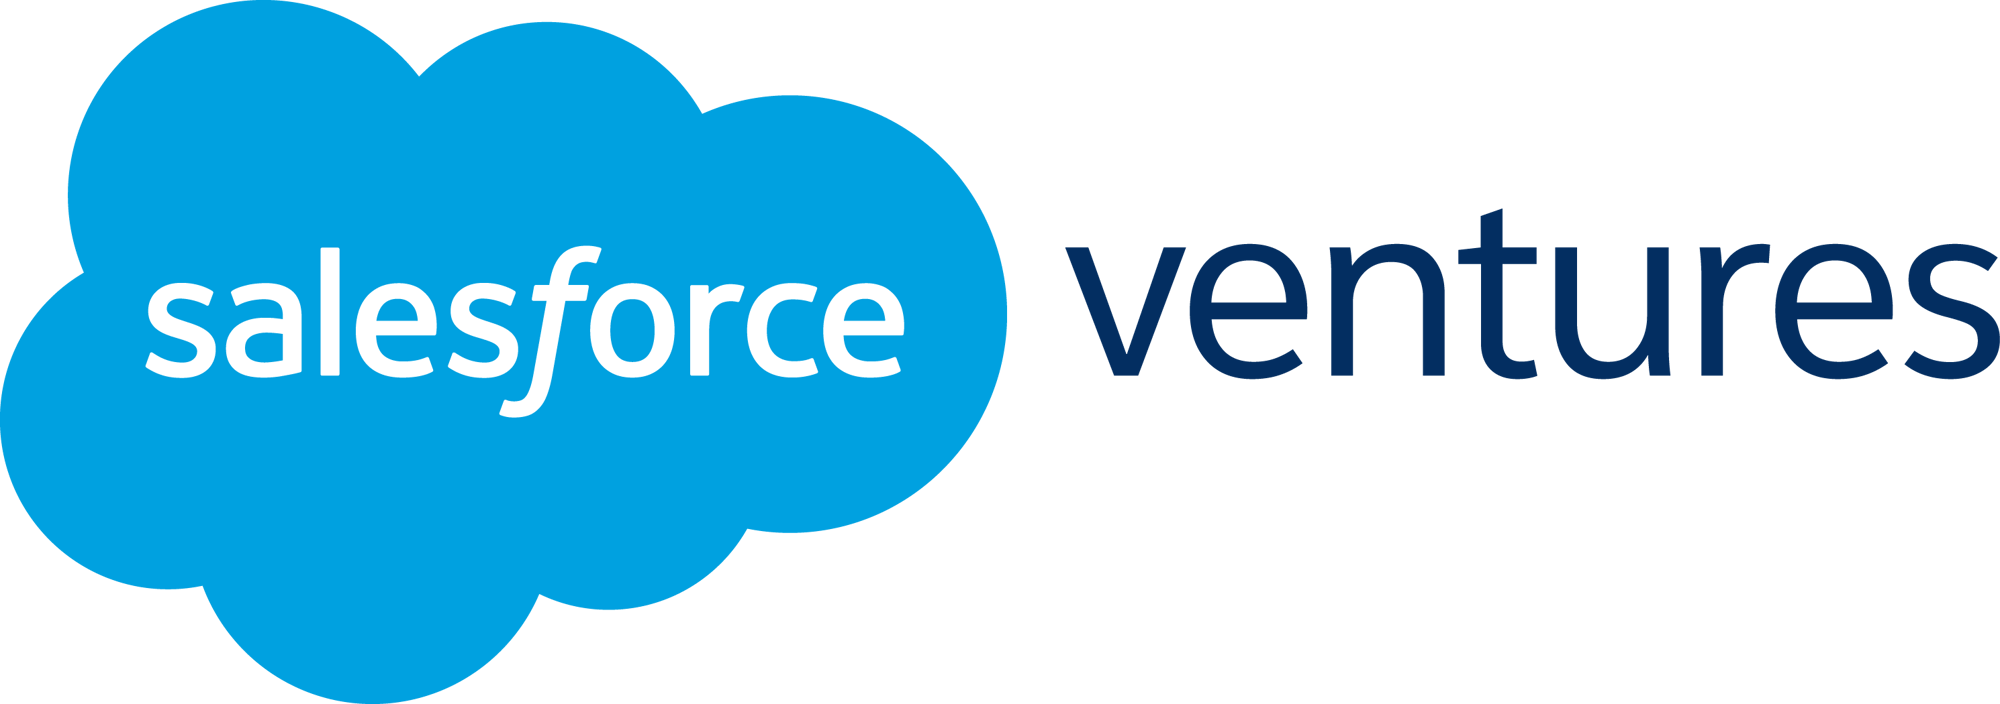 Salesforce-Ventures-Logo-1